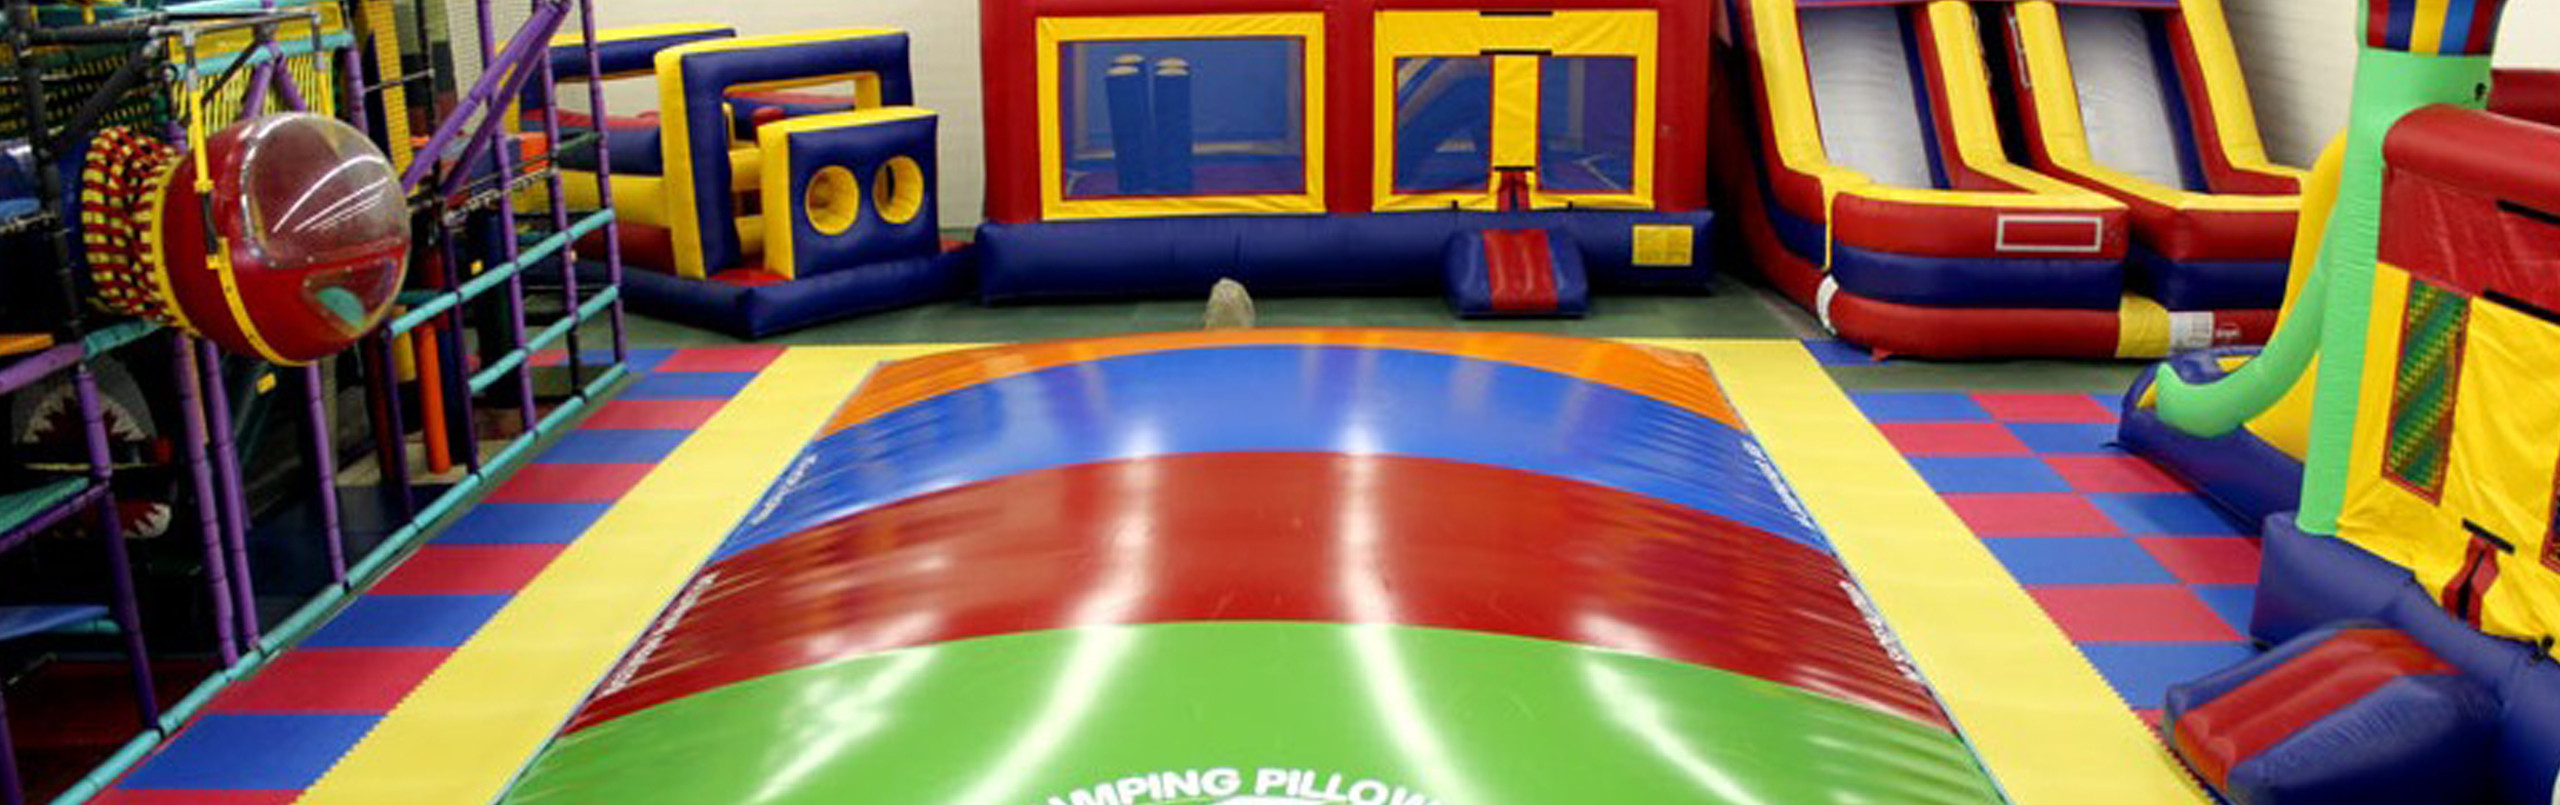 Birthday Party Places For Kids In Utah
 Jump Around Utah Salt Lake Bounce Houses